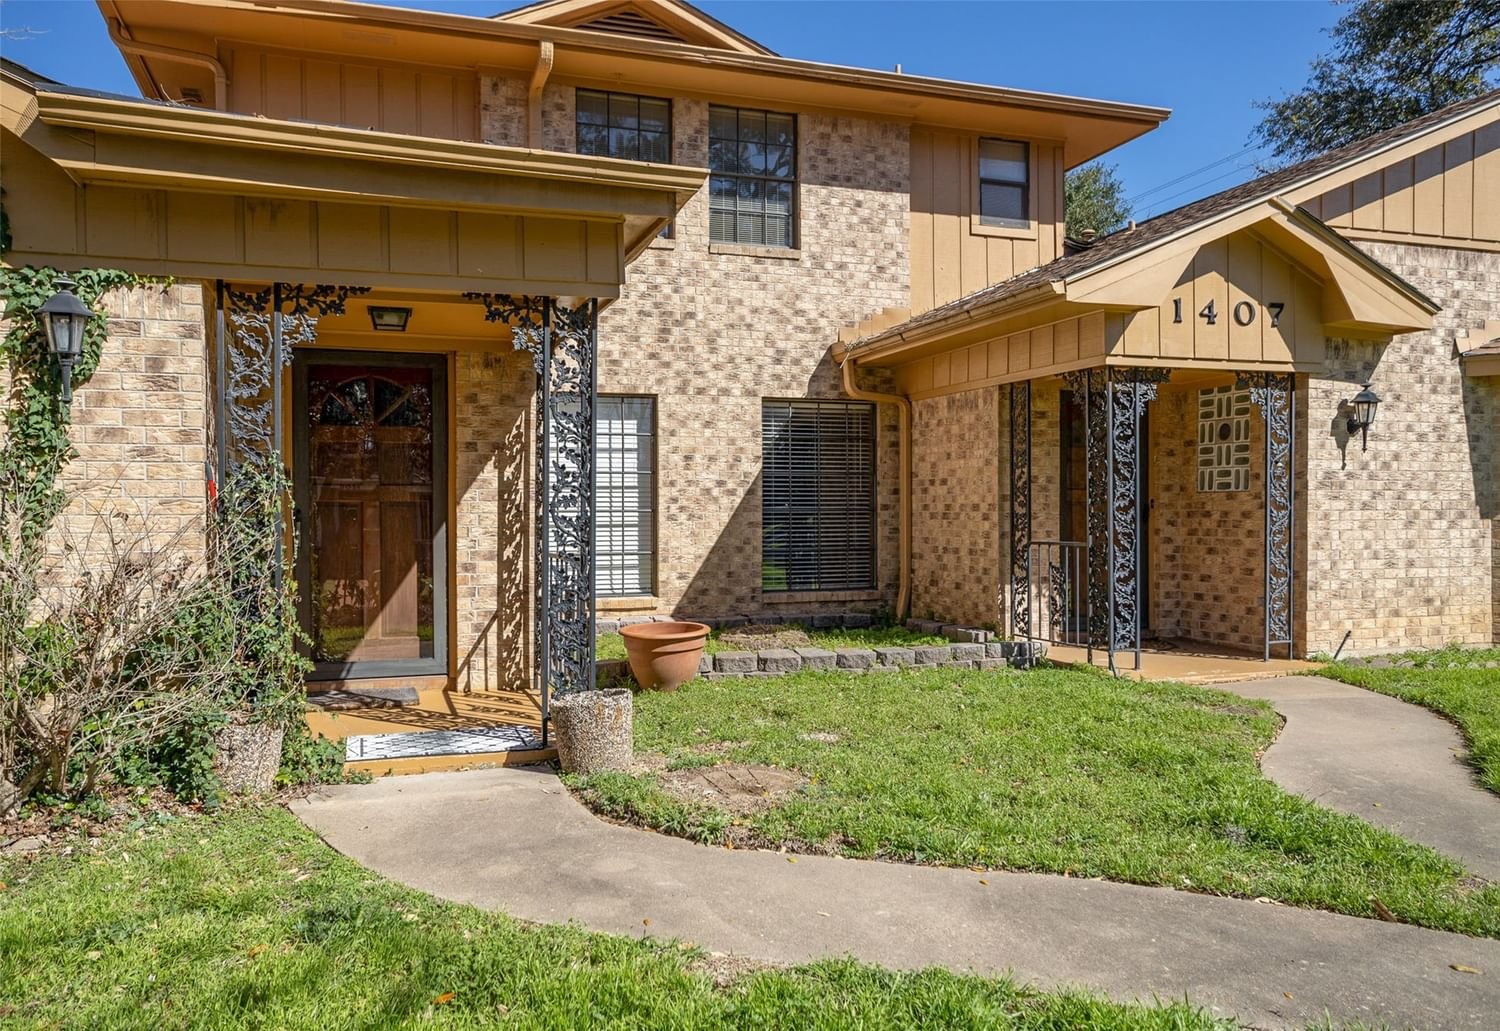 Real estate property located at 1407 Key, Washington, Wilkins W G, Brenham, TX, US